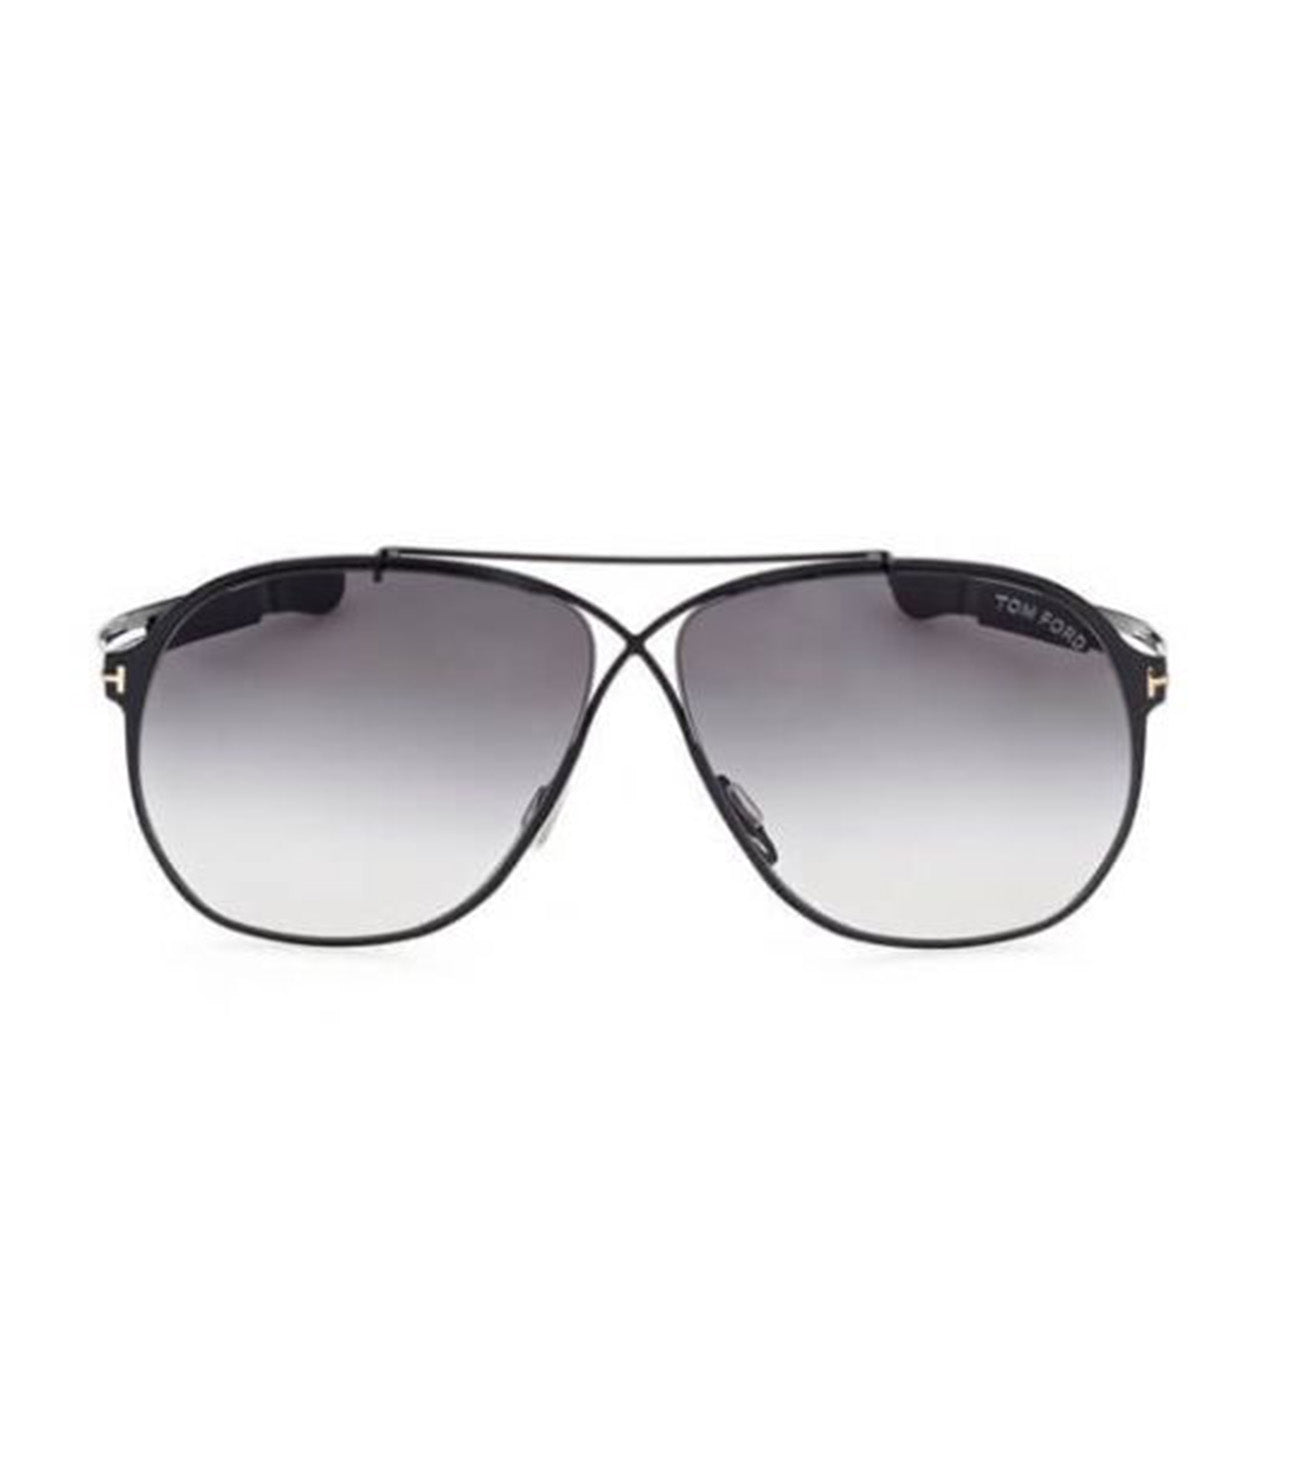 Tom Ford Men's Grey Aviator Sunglasses